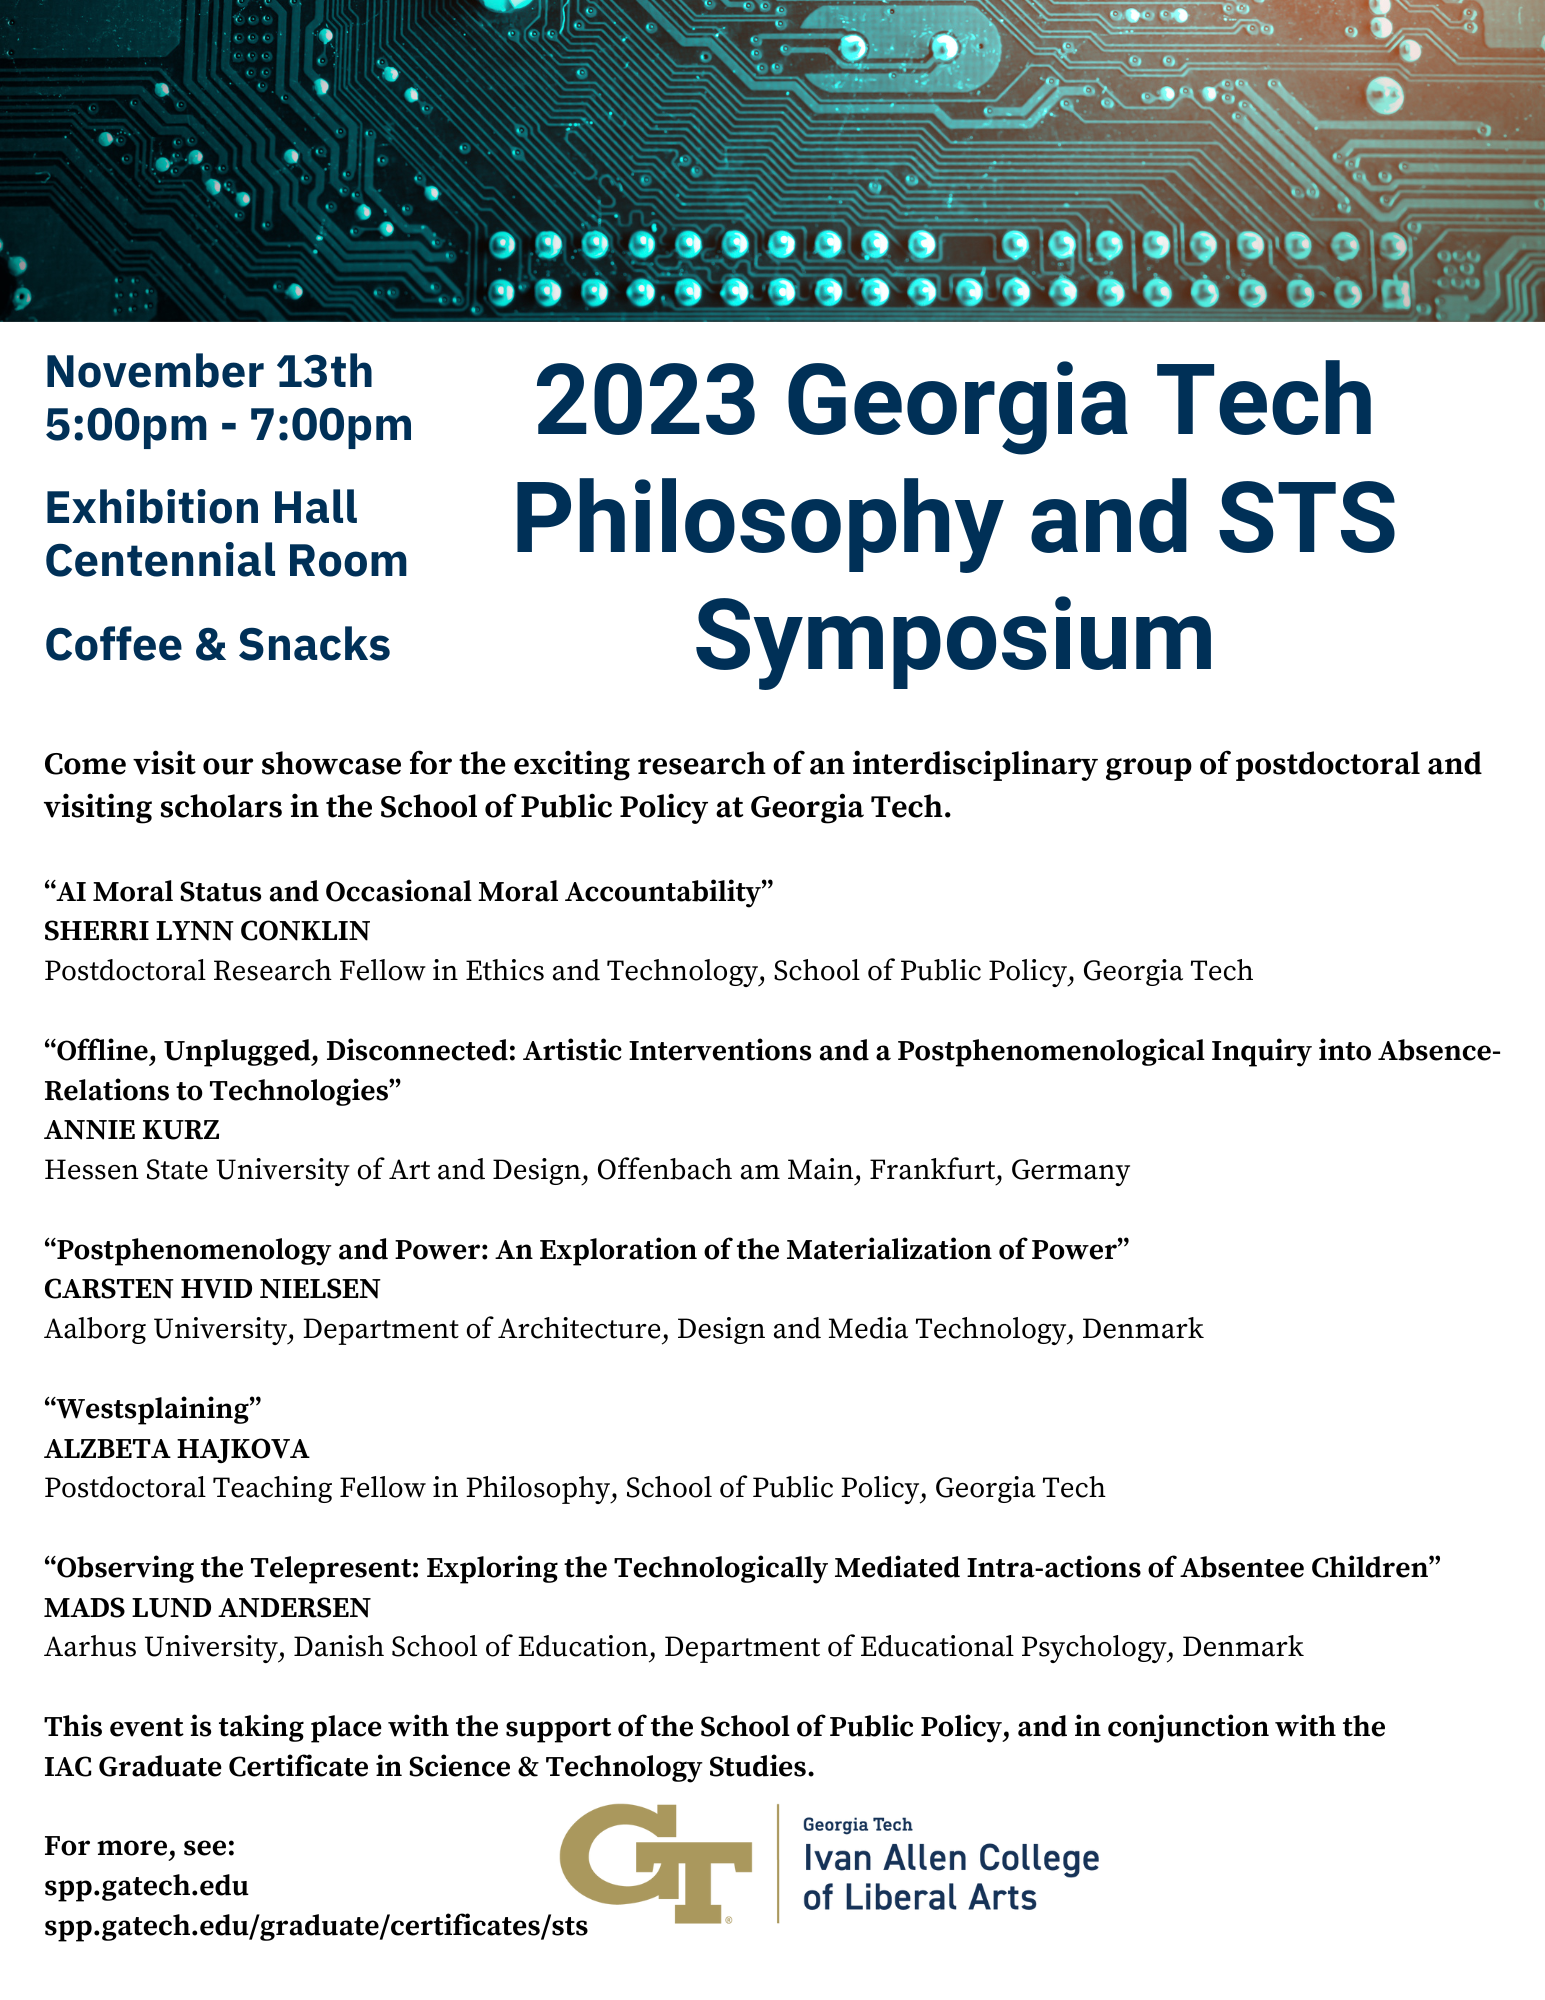 STS Symposium Flyer